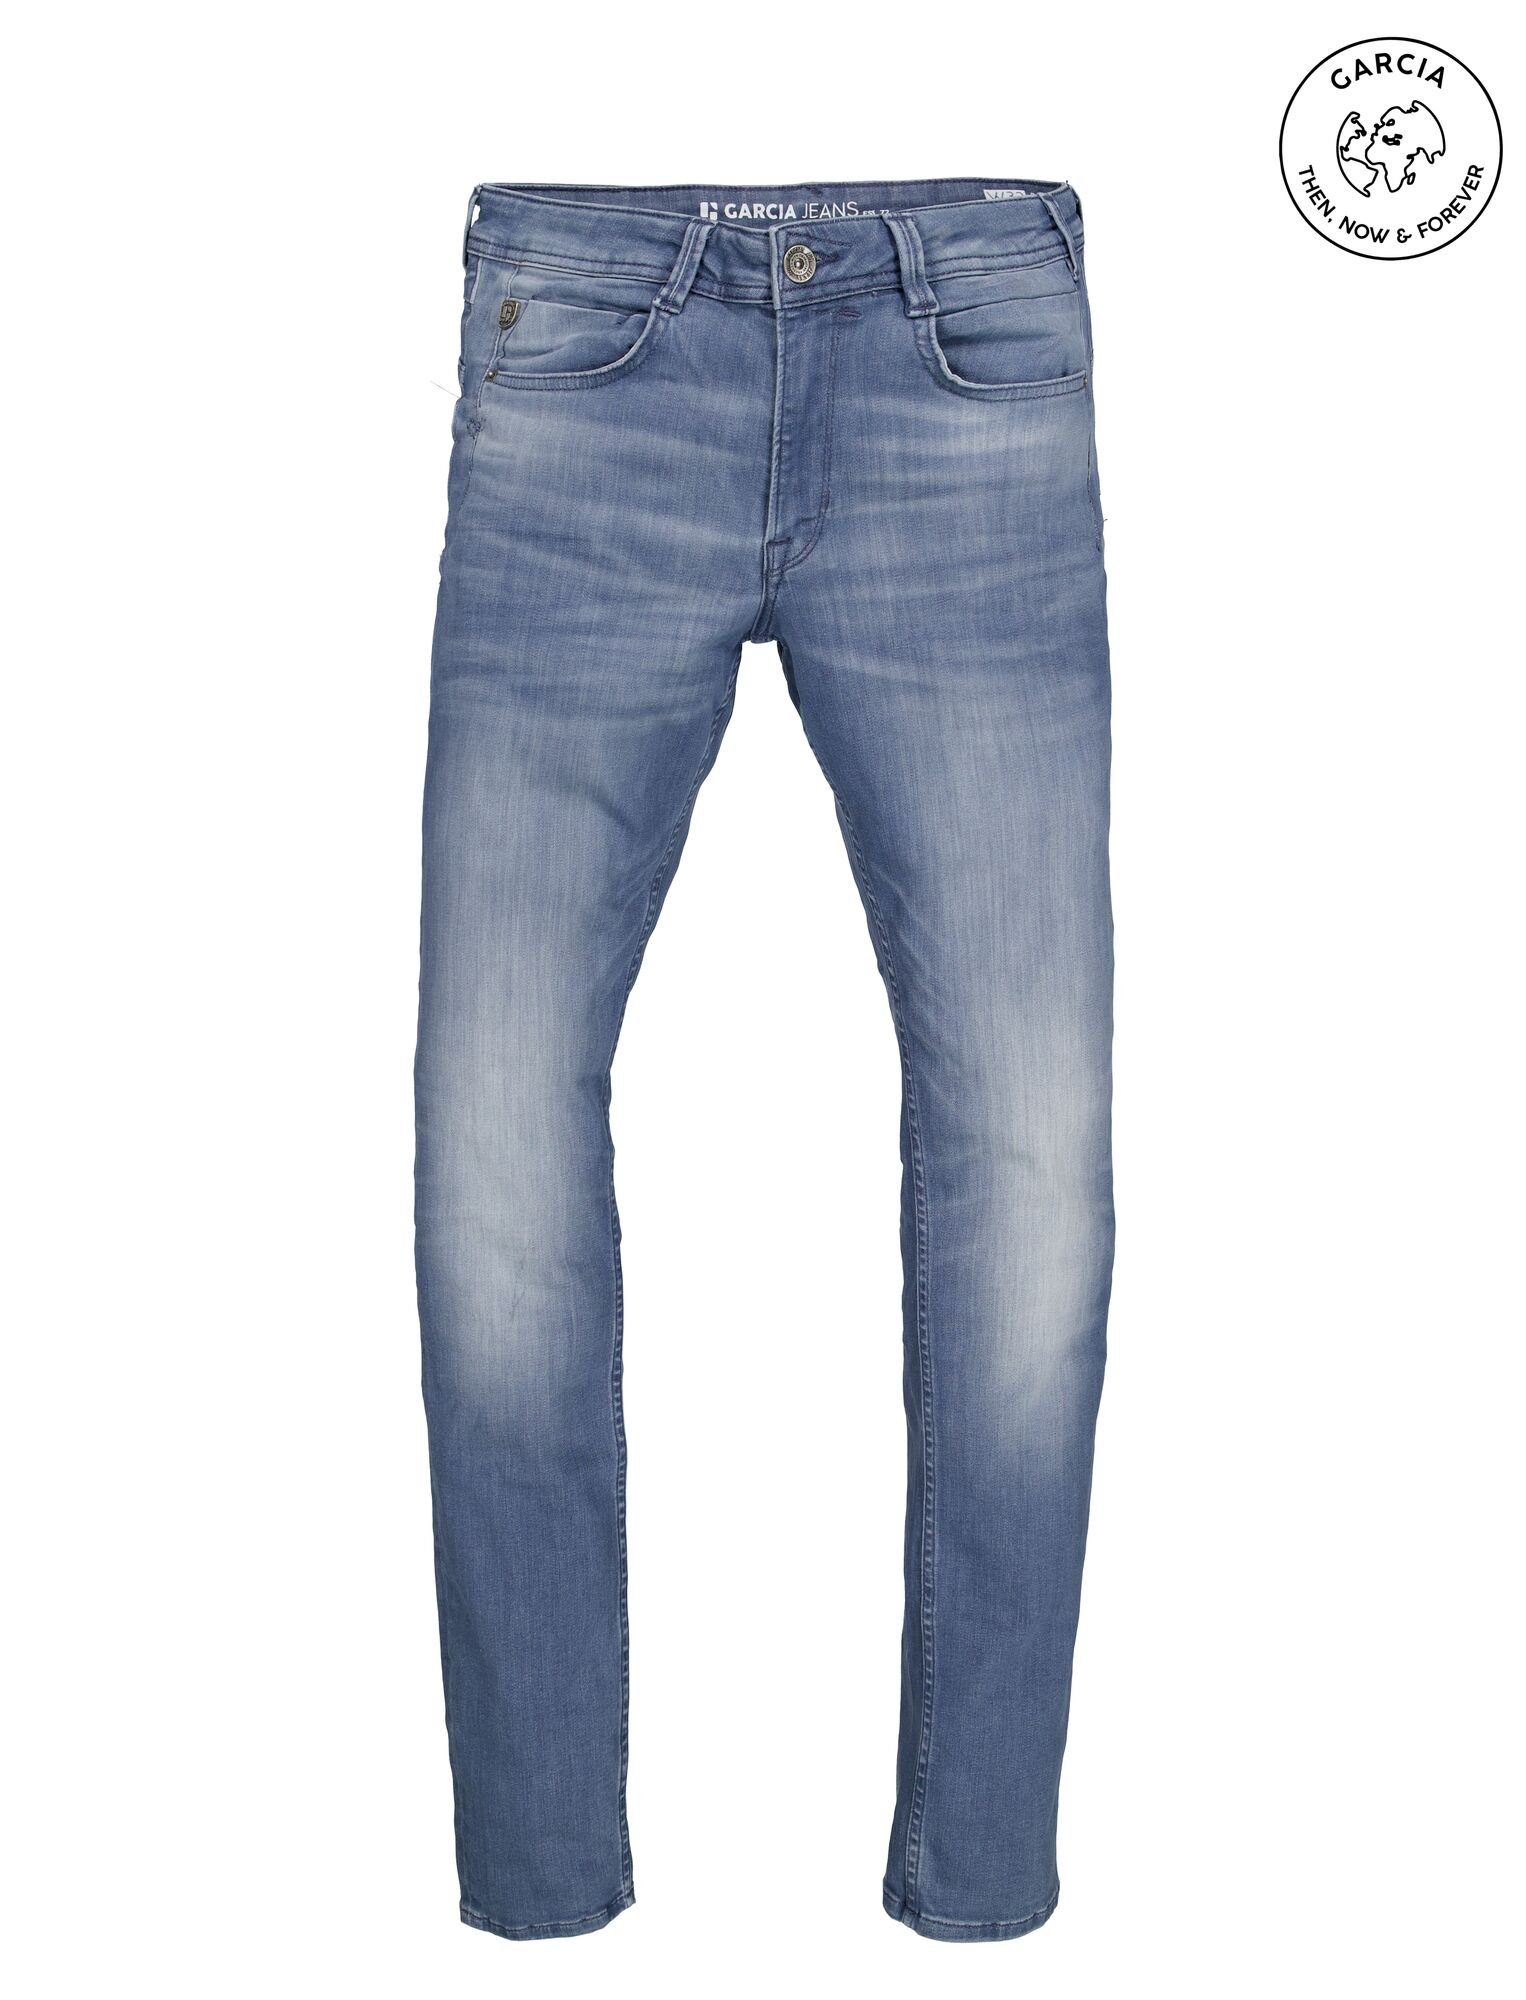 GARCIA JEANS 690.3925 mid - Ultra blue used ROCKO GARCIA 5-Pocket-Jeans medium Denim